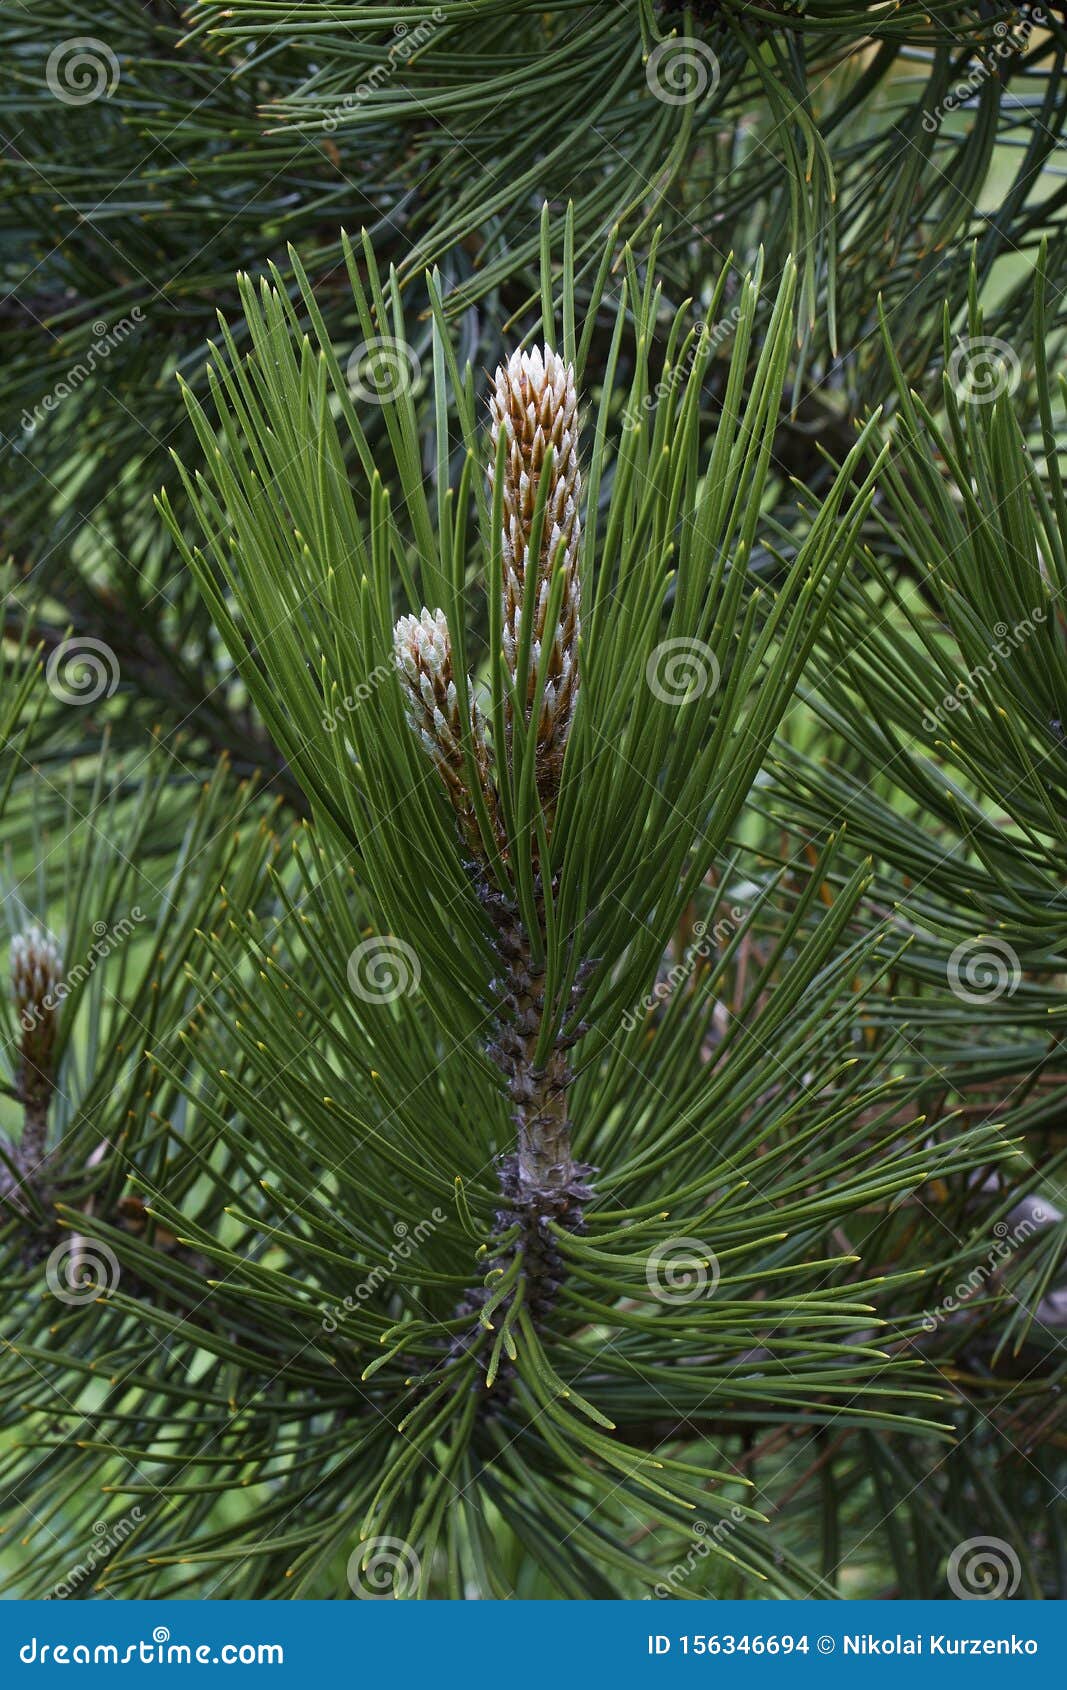 bosnian pine needles and juvenile twig